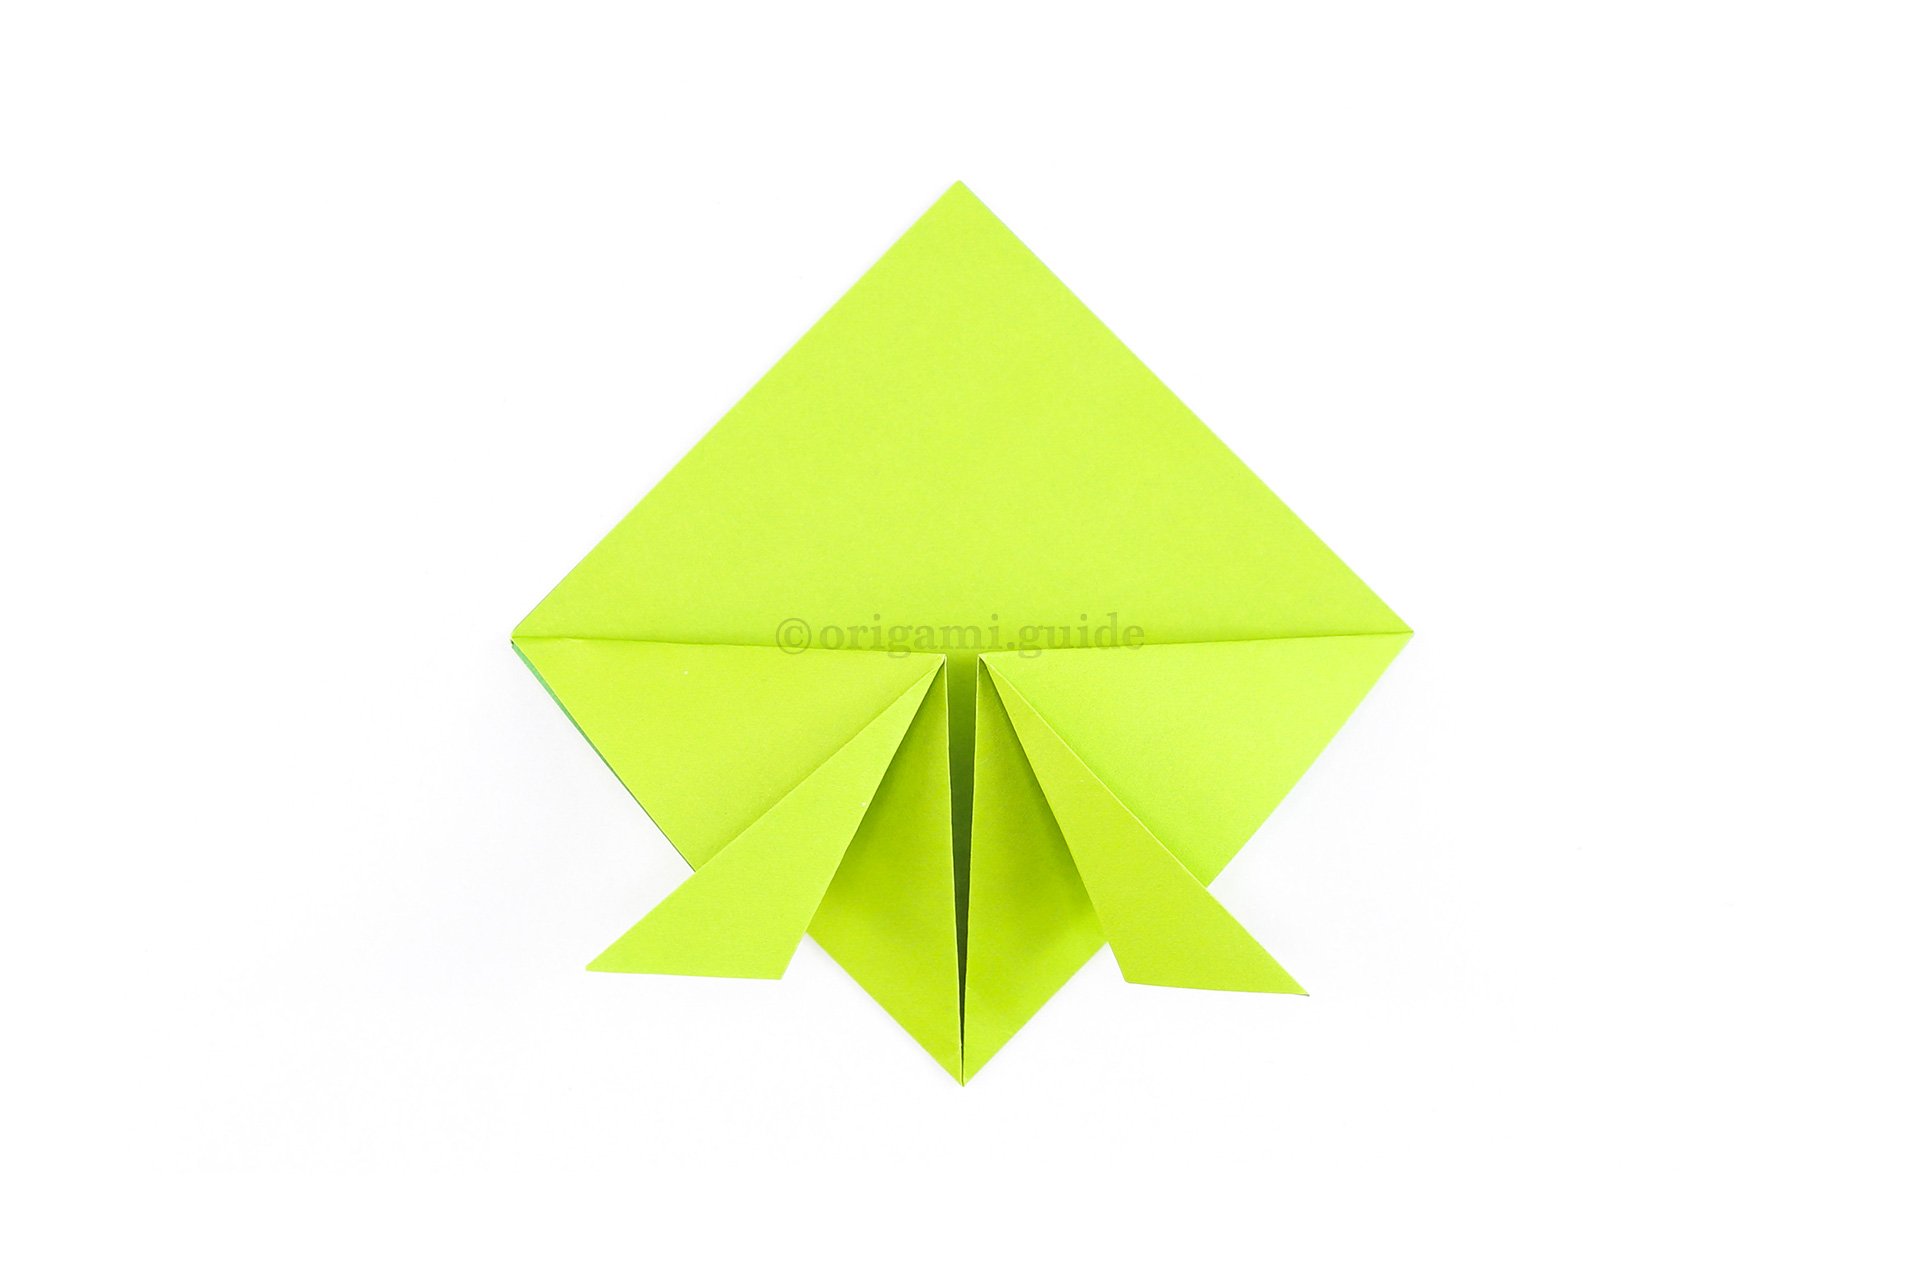 Fold both bottom points diagonally outwards as shown.